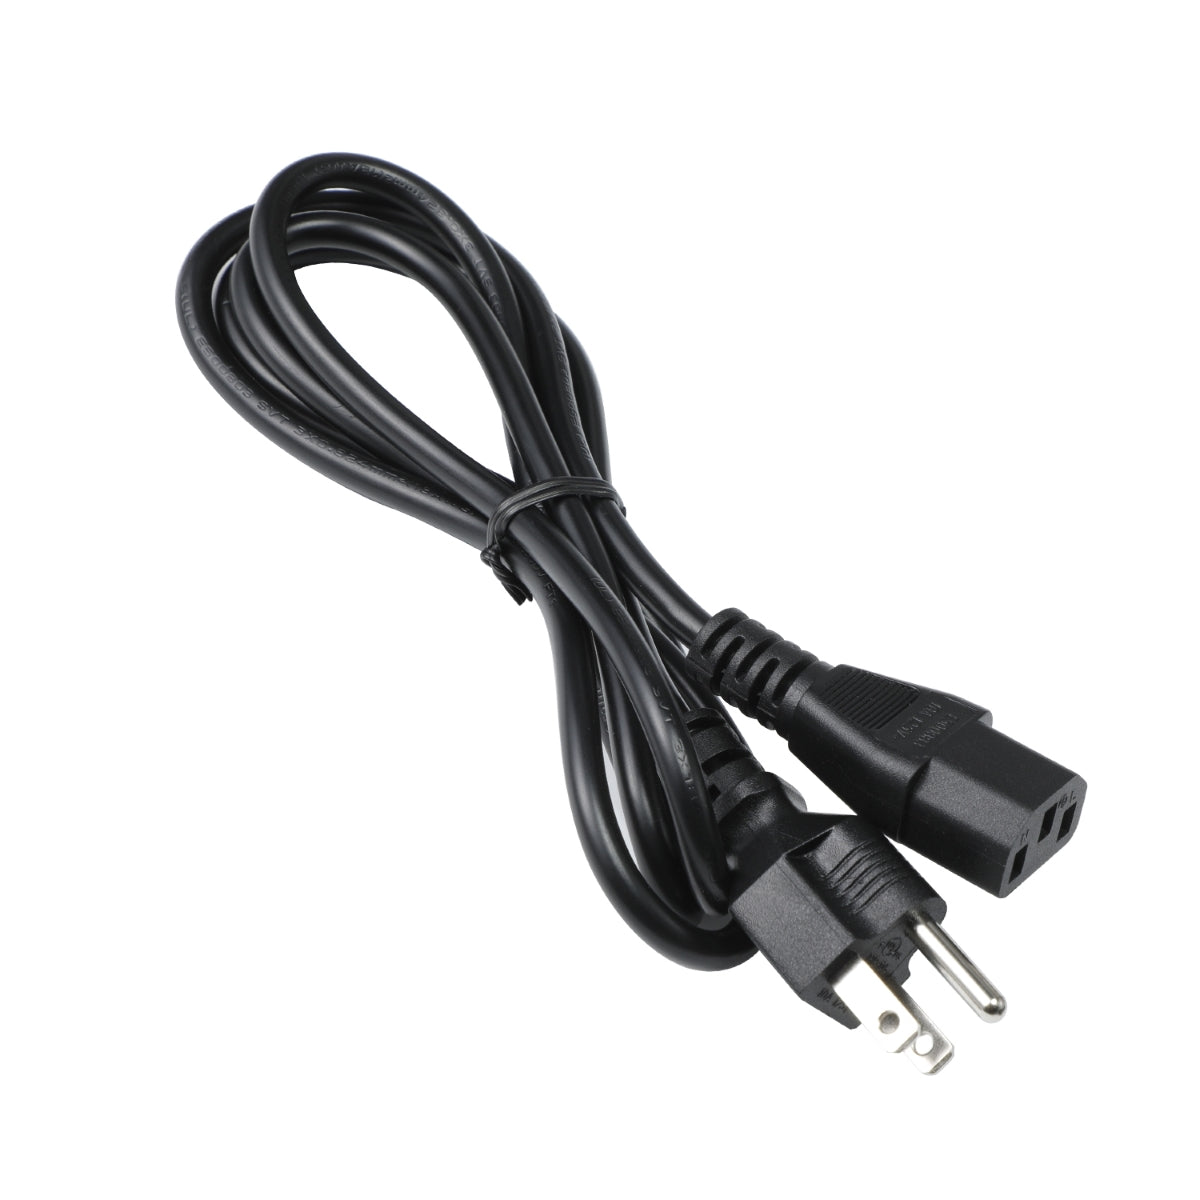 Power Cord for HP EliteDisplay E223 Monitor